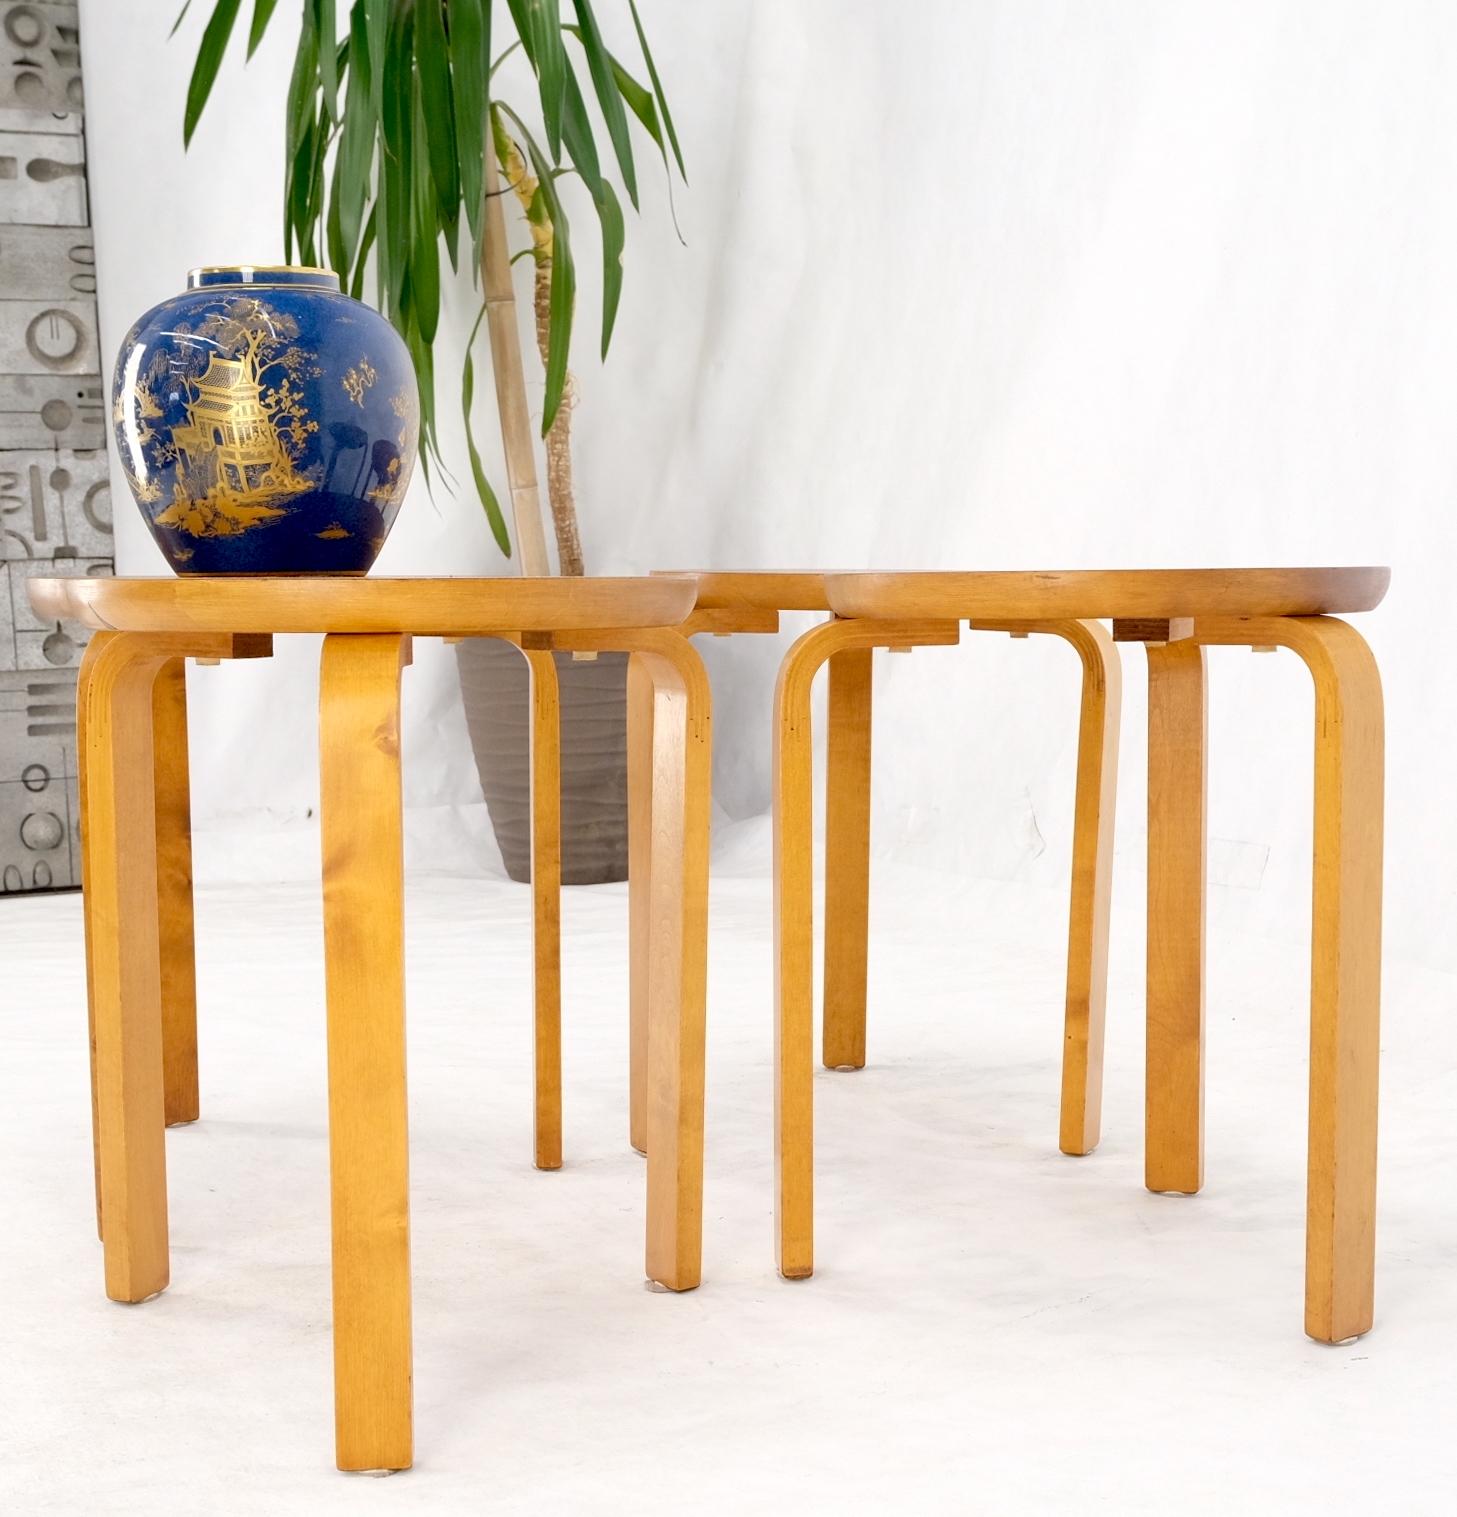 Set of 4 Alvar Aalto Round Birch Bent Leg Nesting Tables c.1950s Made in Sweden For Sale 7